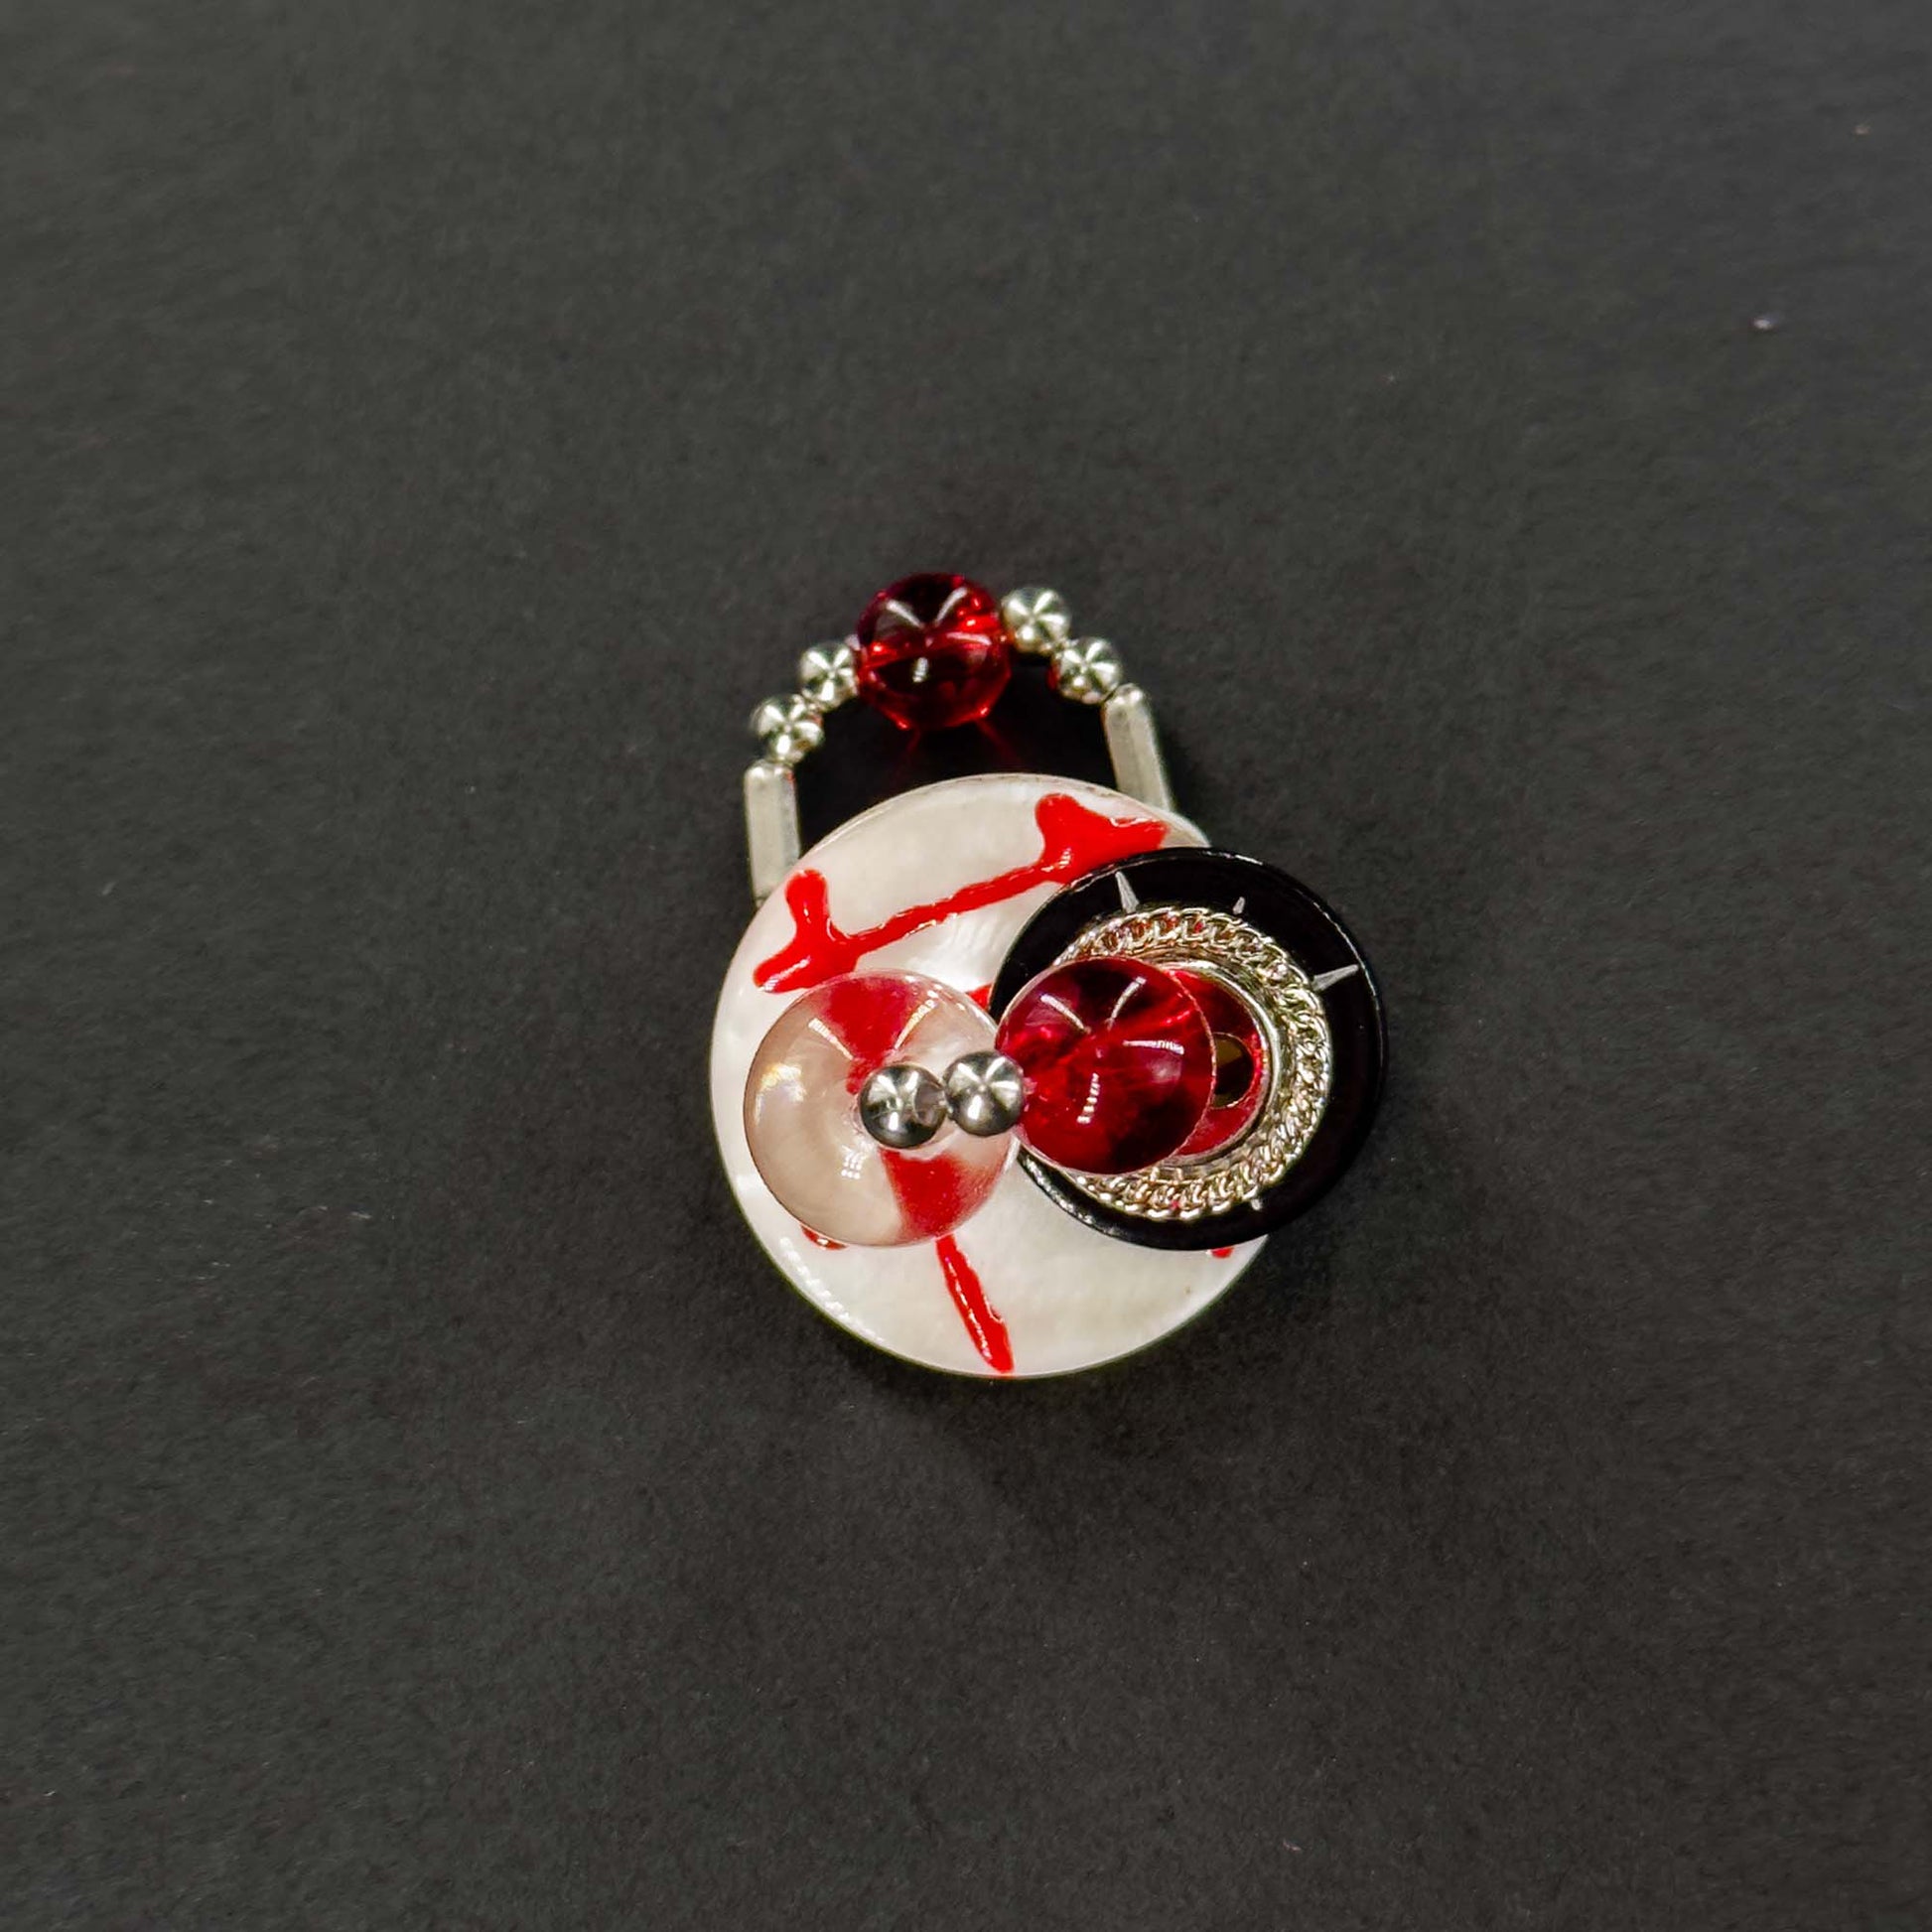 Handmade ring made of seashell, colored glaze